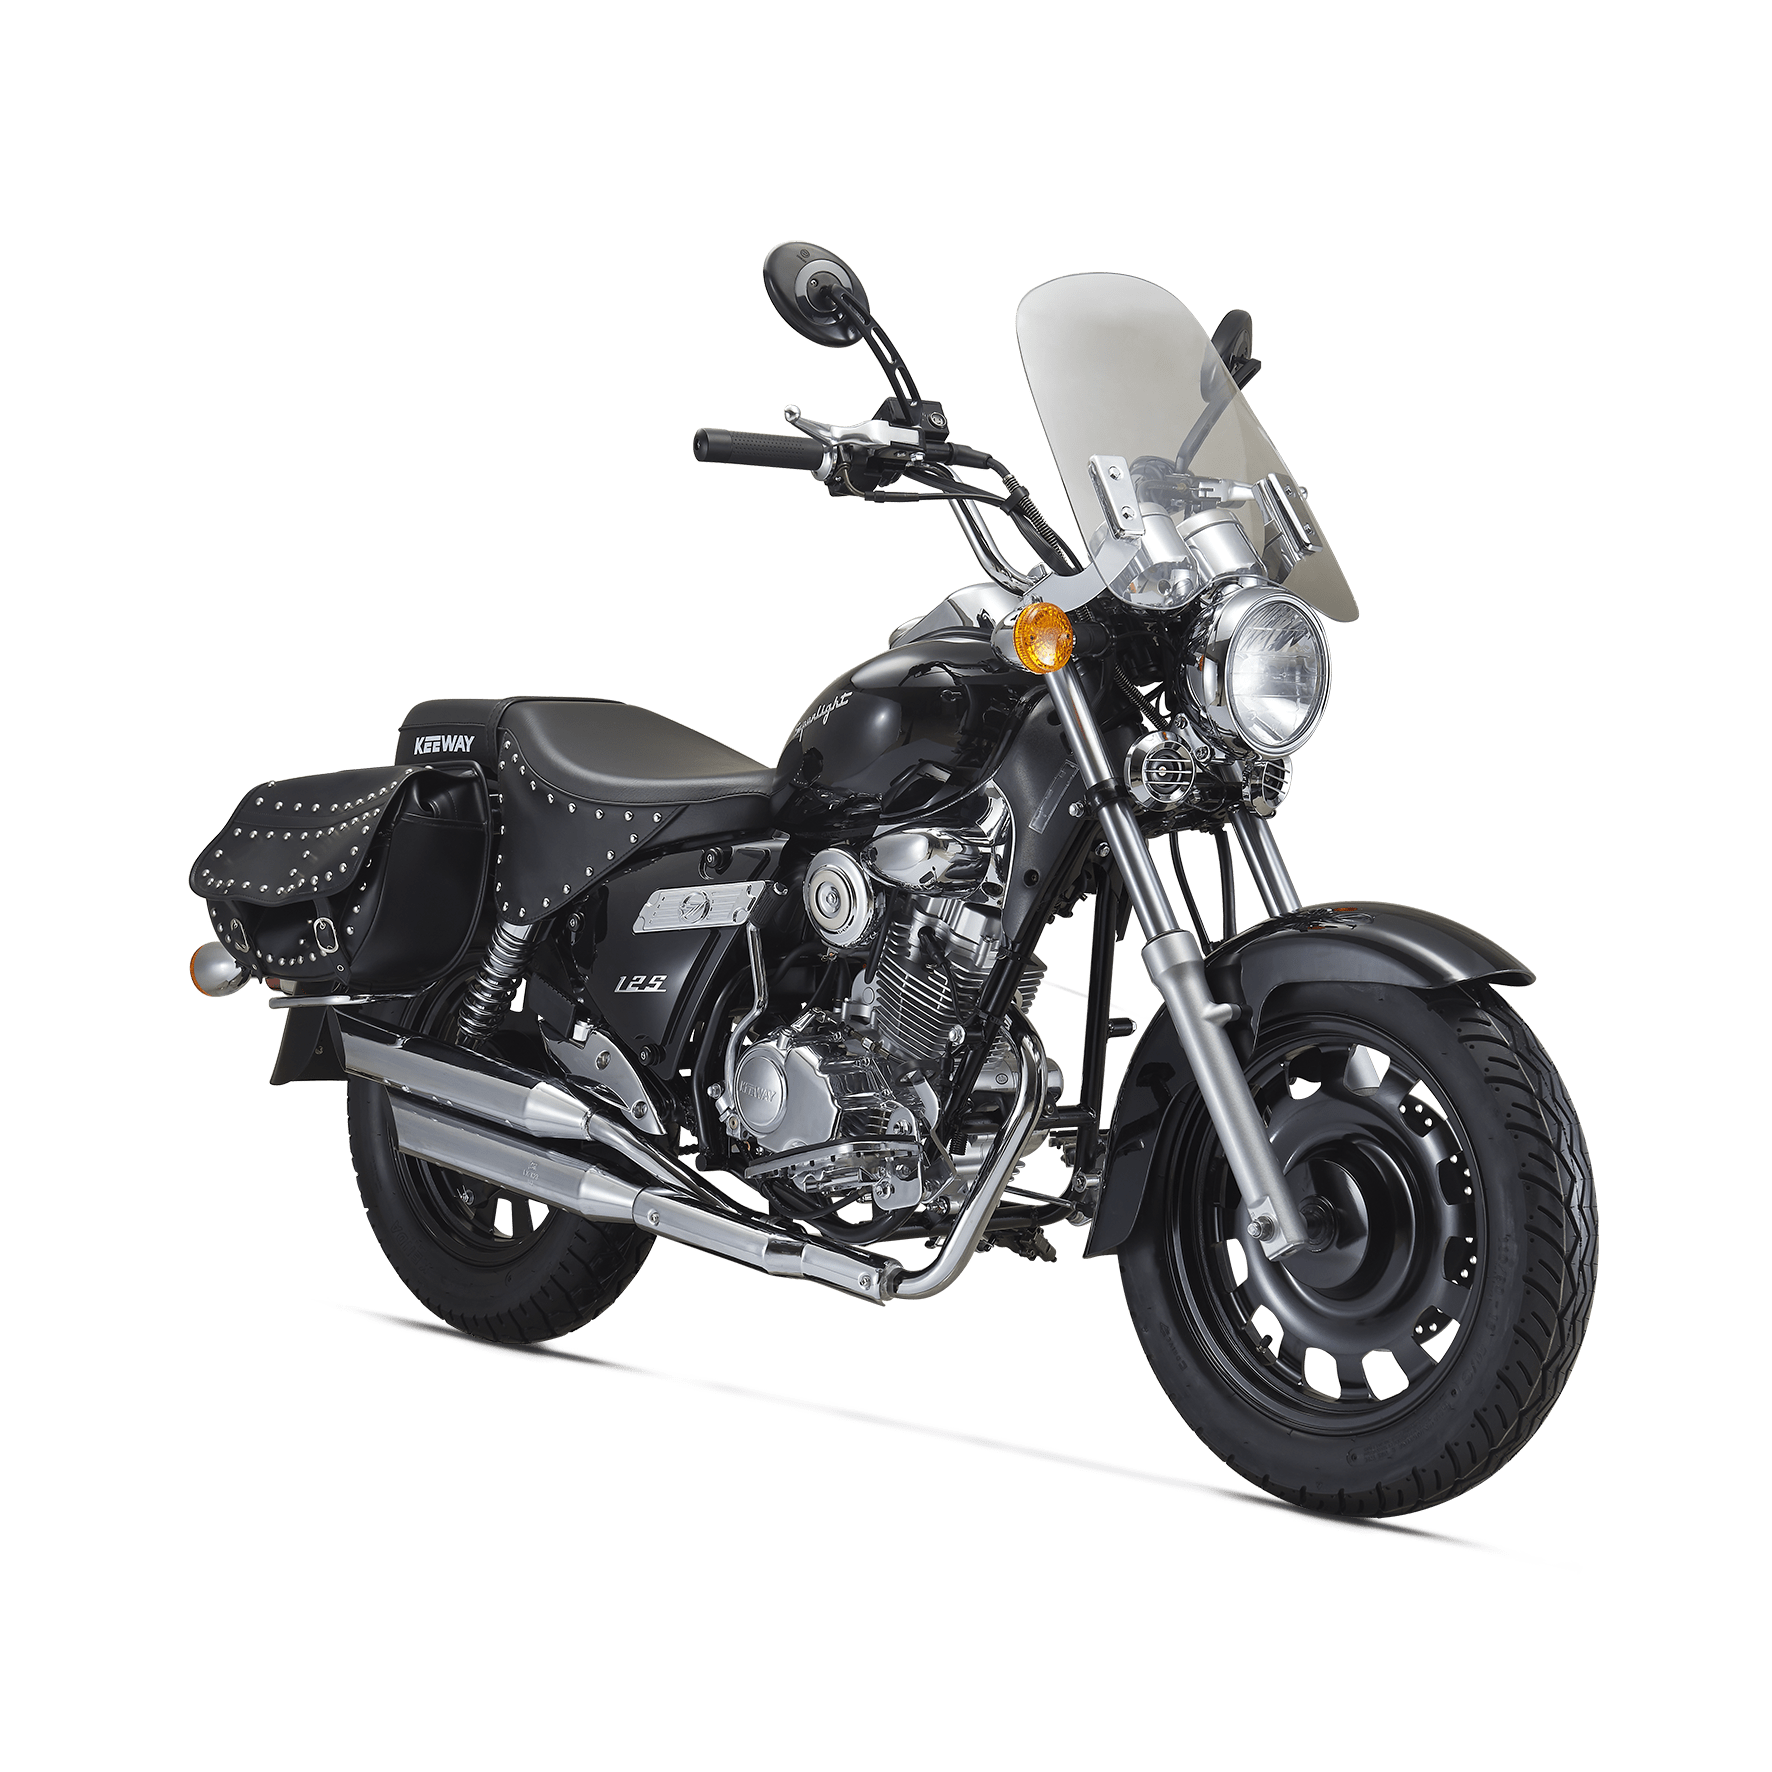 Keeway Superlight EFi 125cc STD motorcycle . Avon Motorcycles